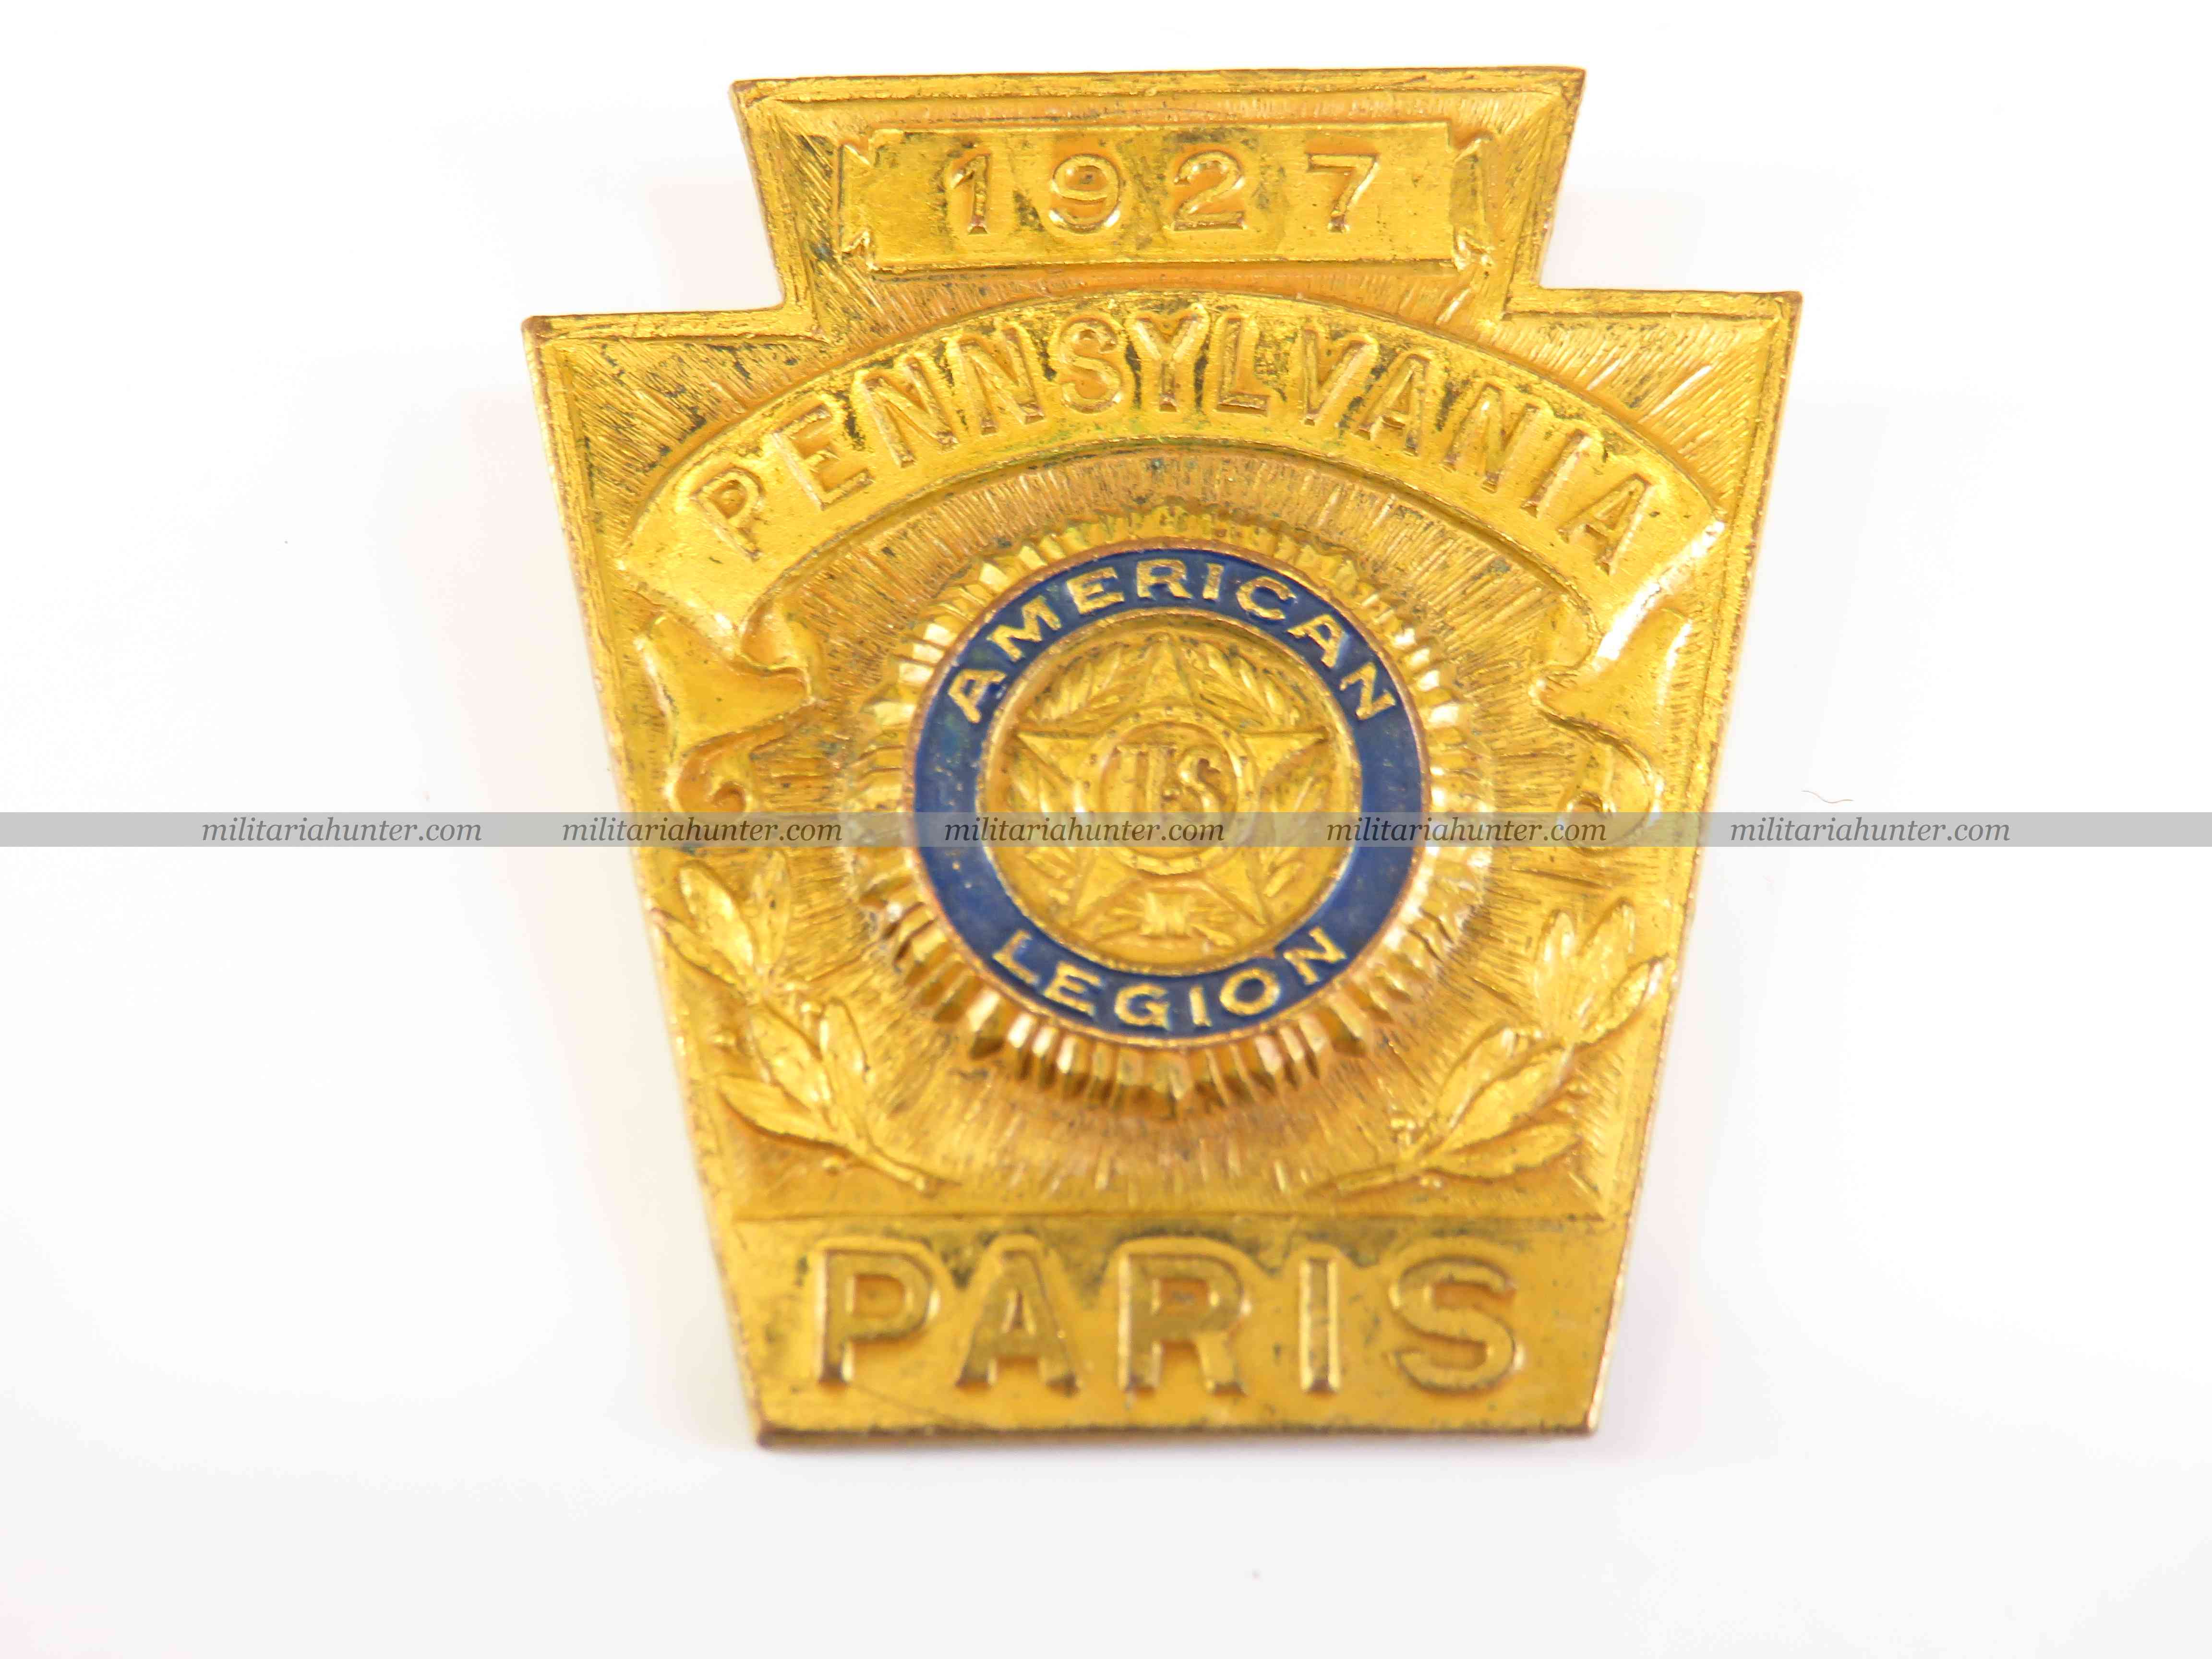 militaria : ww1 US veteran American Legion insignia from Paris, Pennsylvania